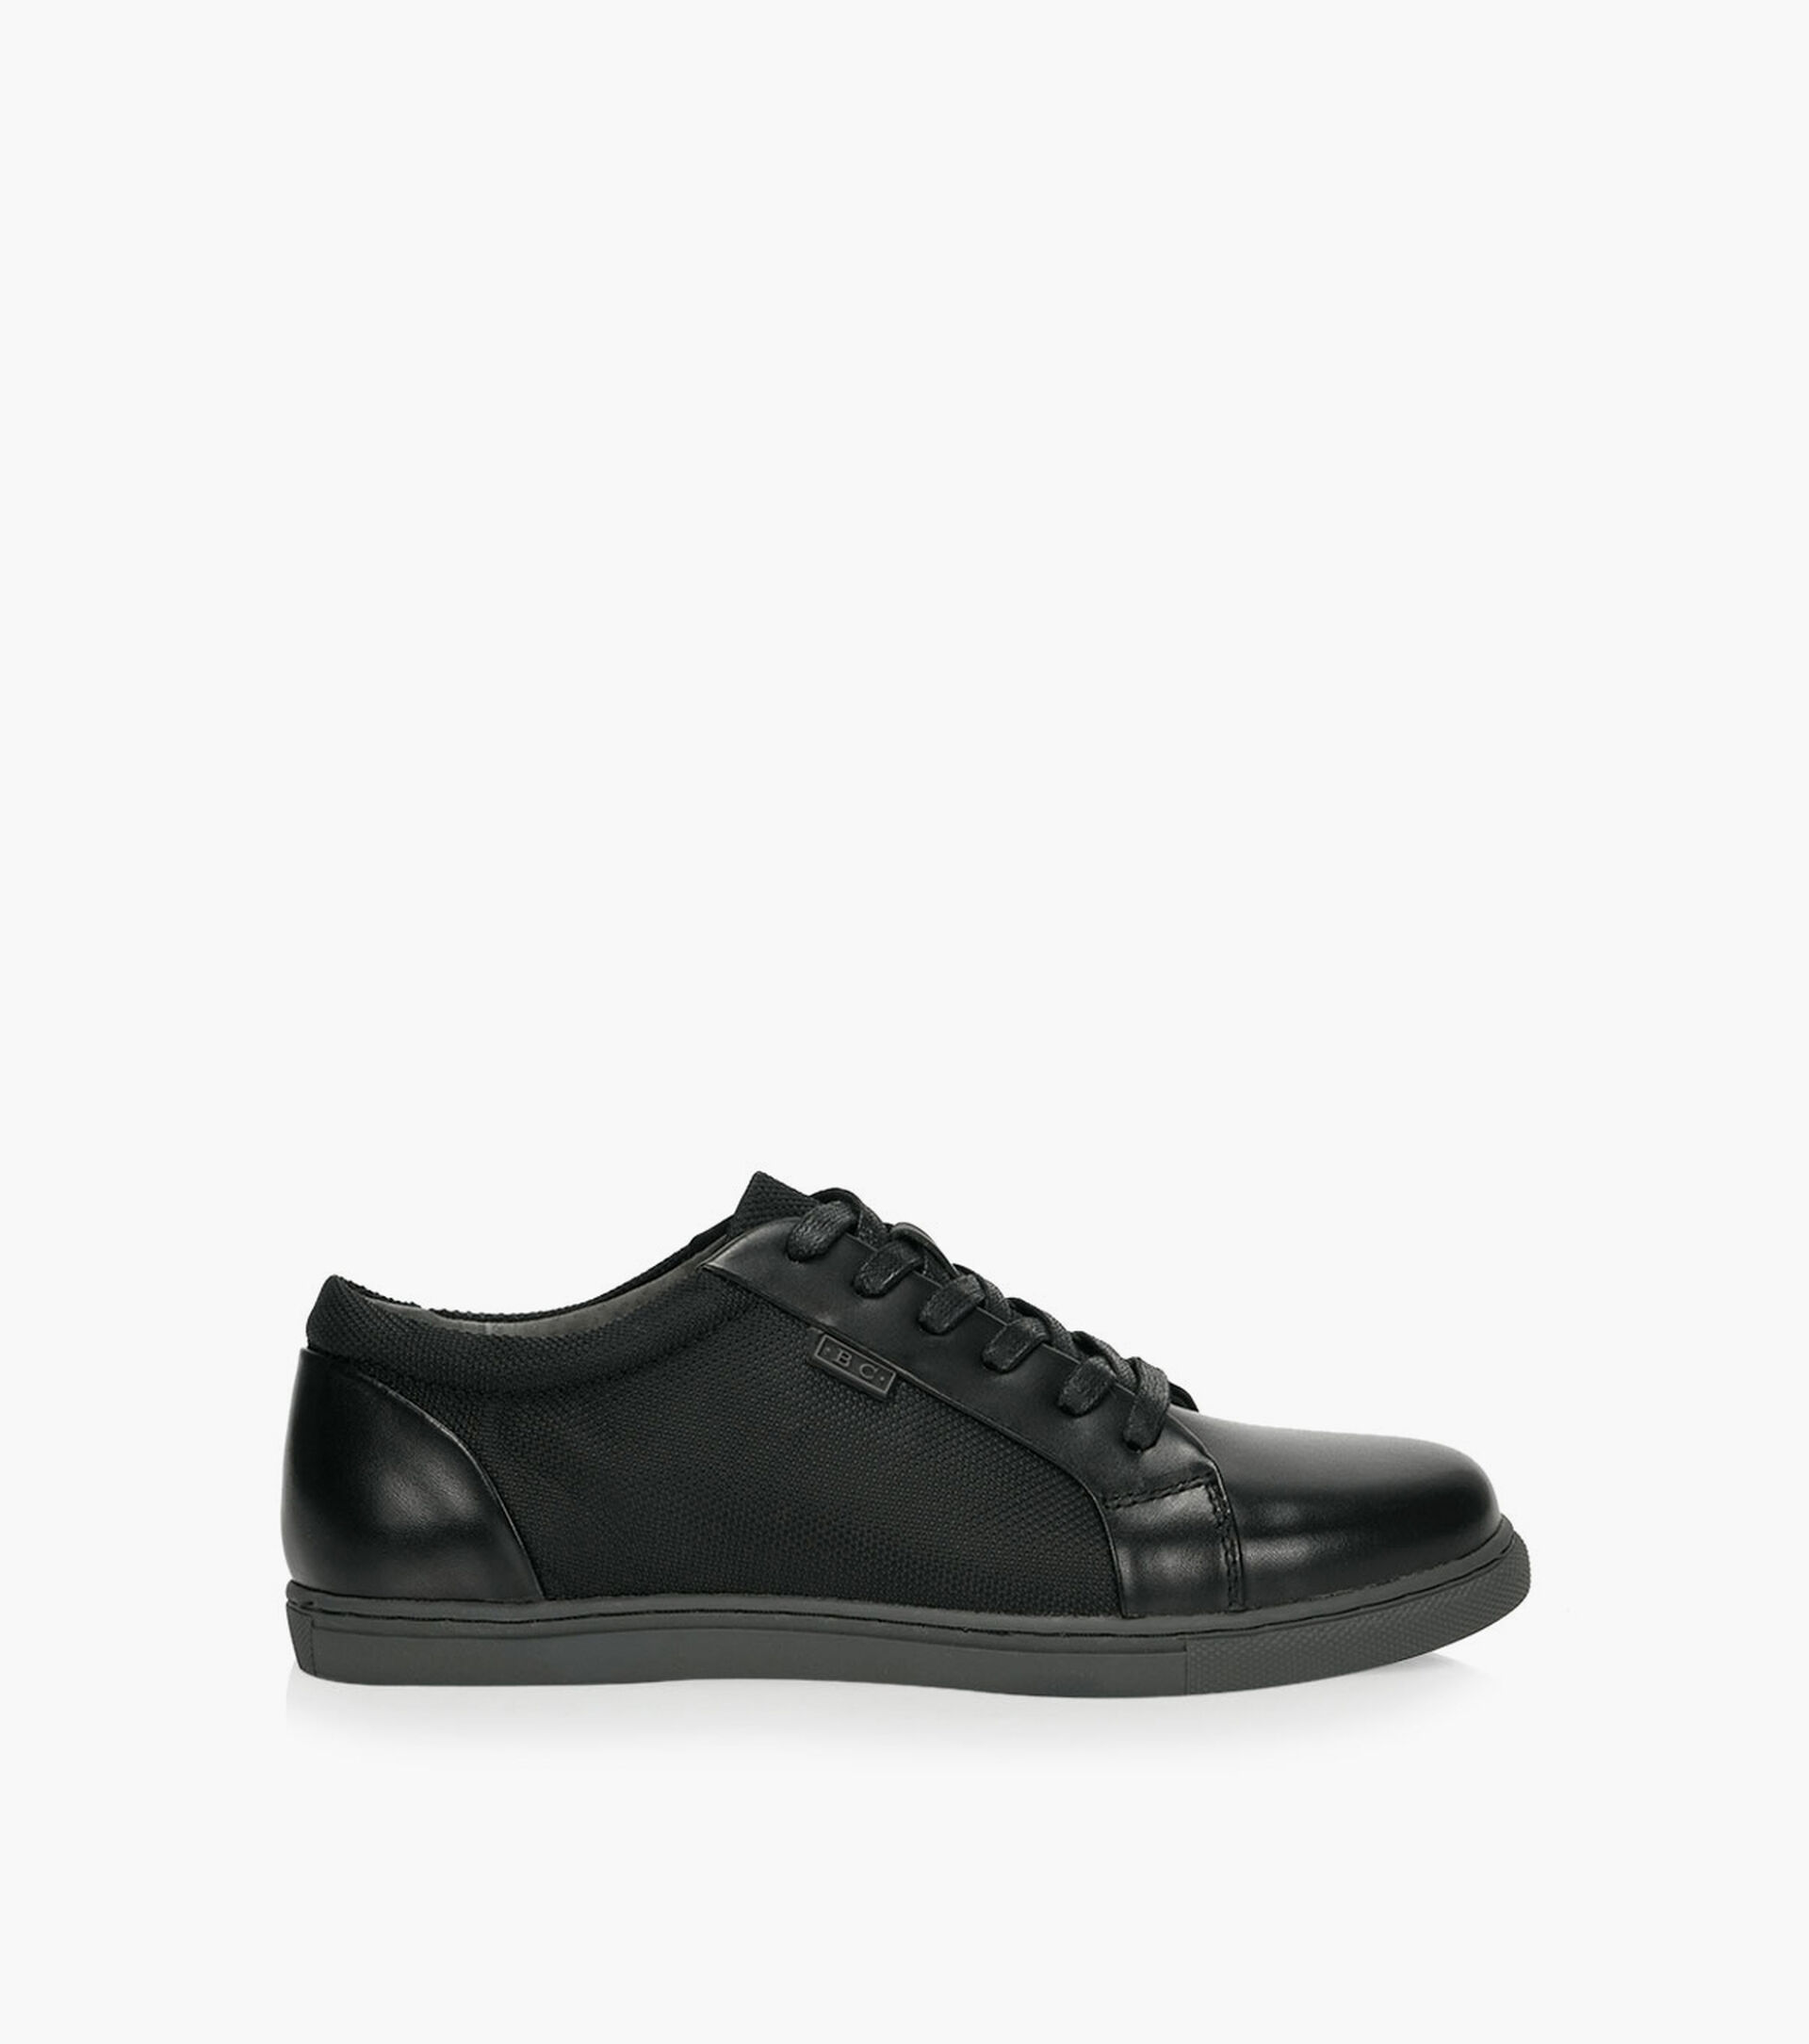 BROWNS COLLEGE CLINTON - Cuir Noir | Browns Shoes